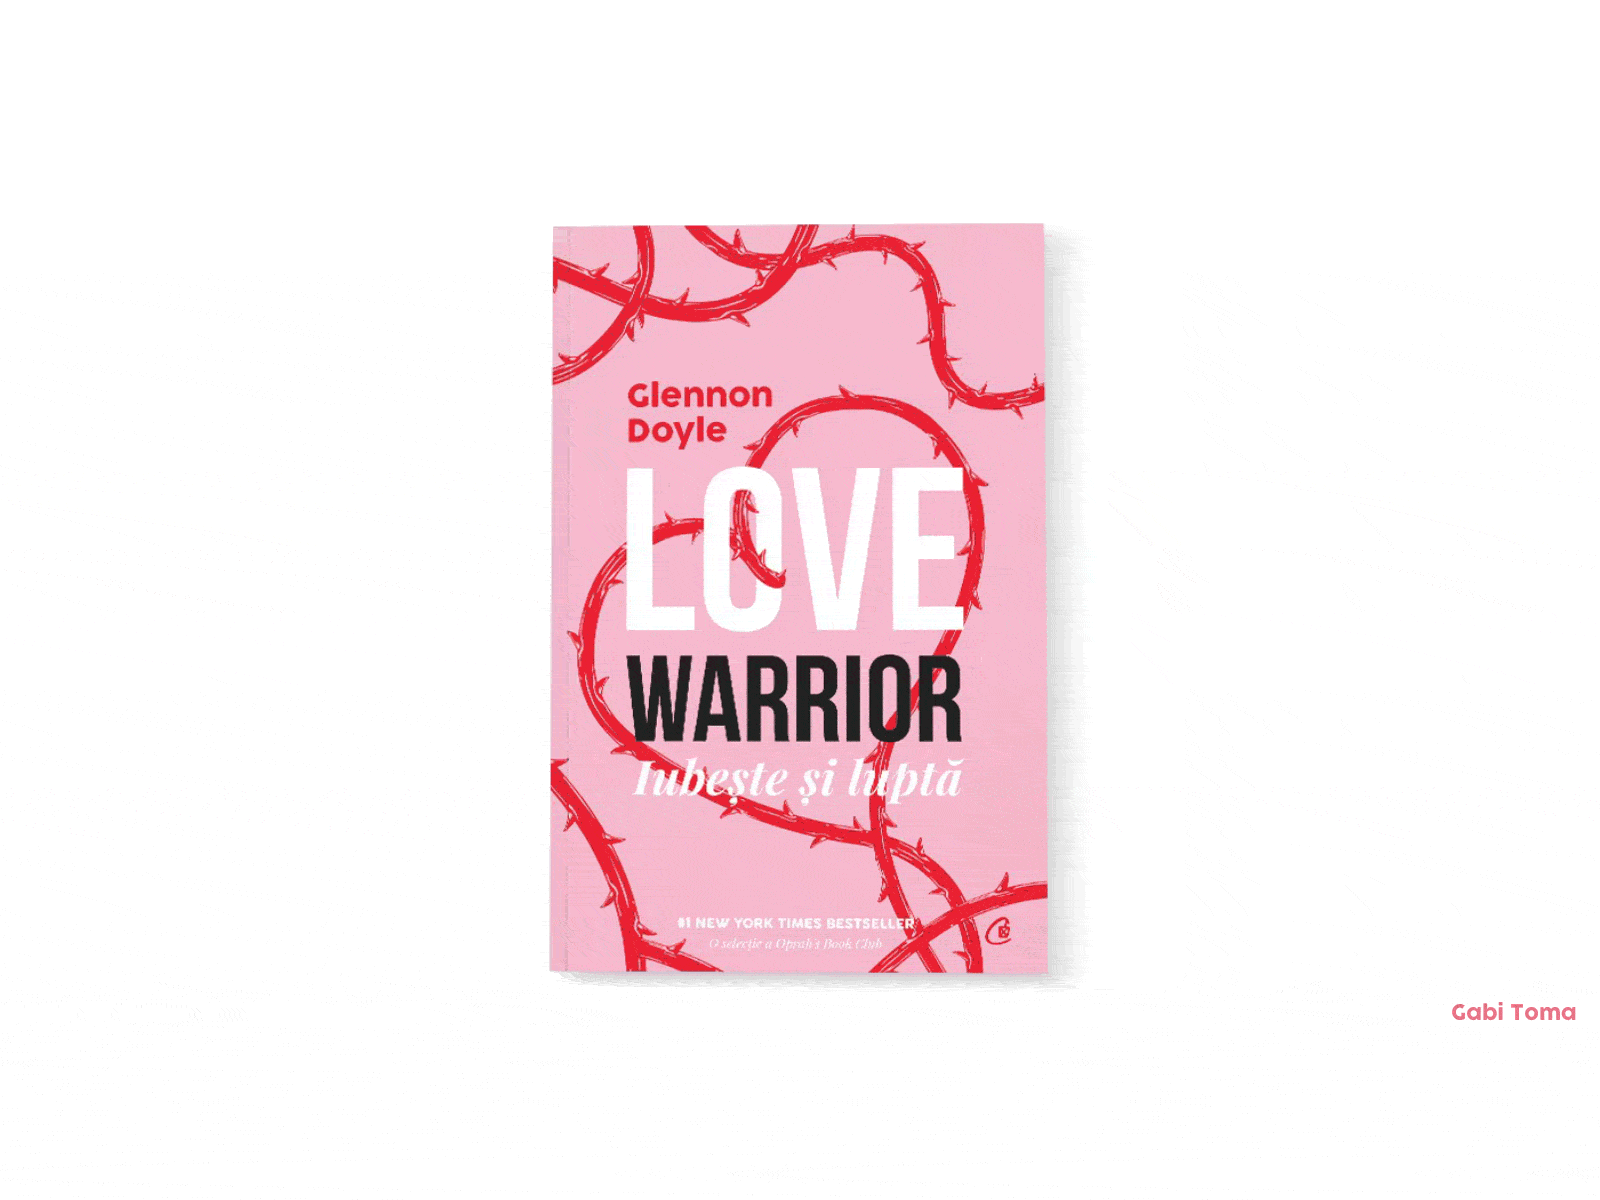 Love Warrior - book cover animated gif animation 2d book cover book cover design book trailer digital illustrator framebyframe